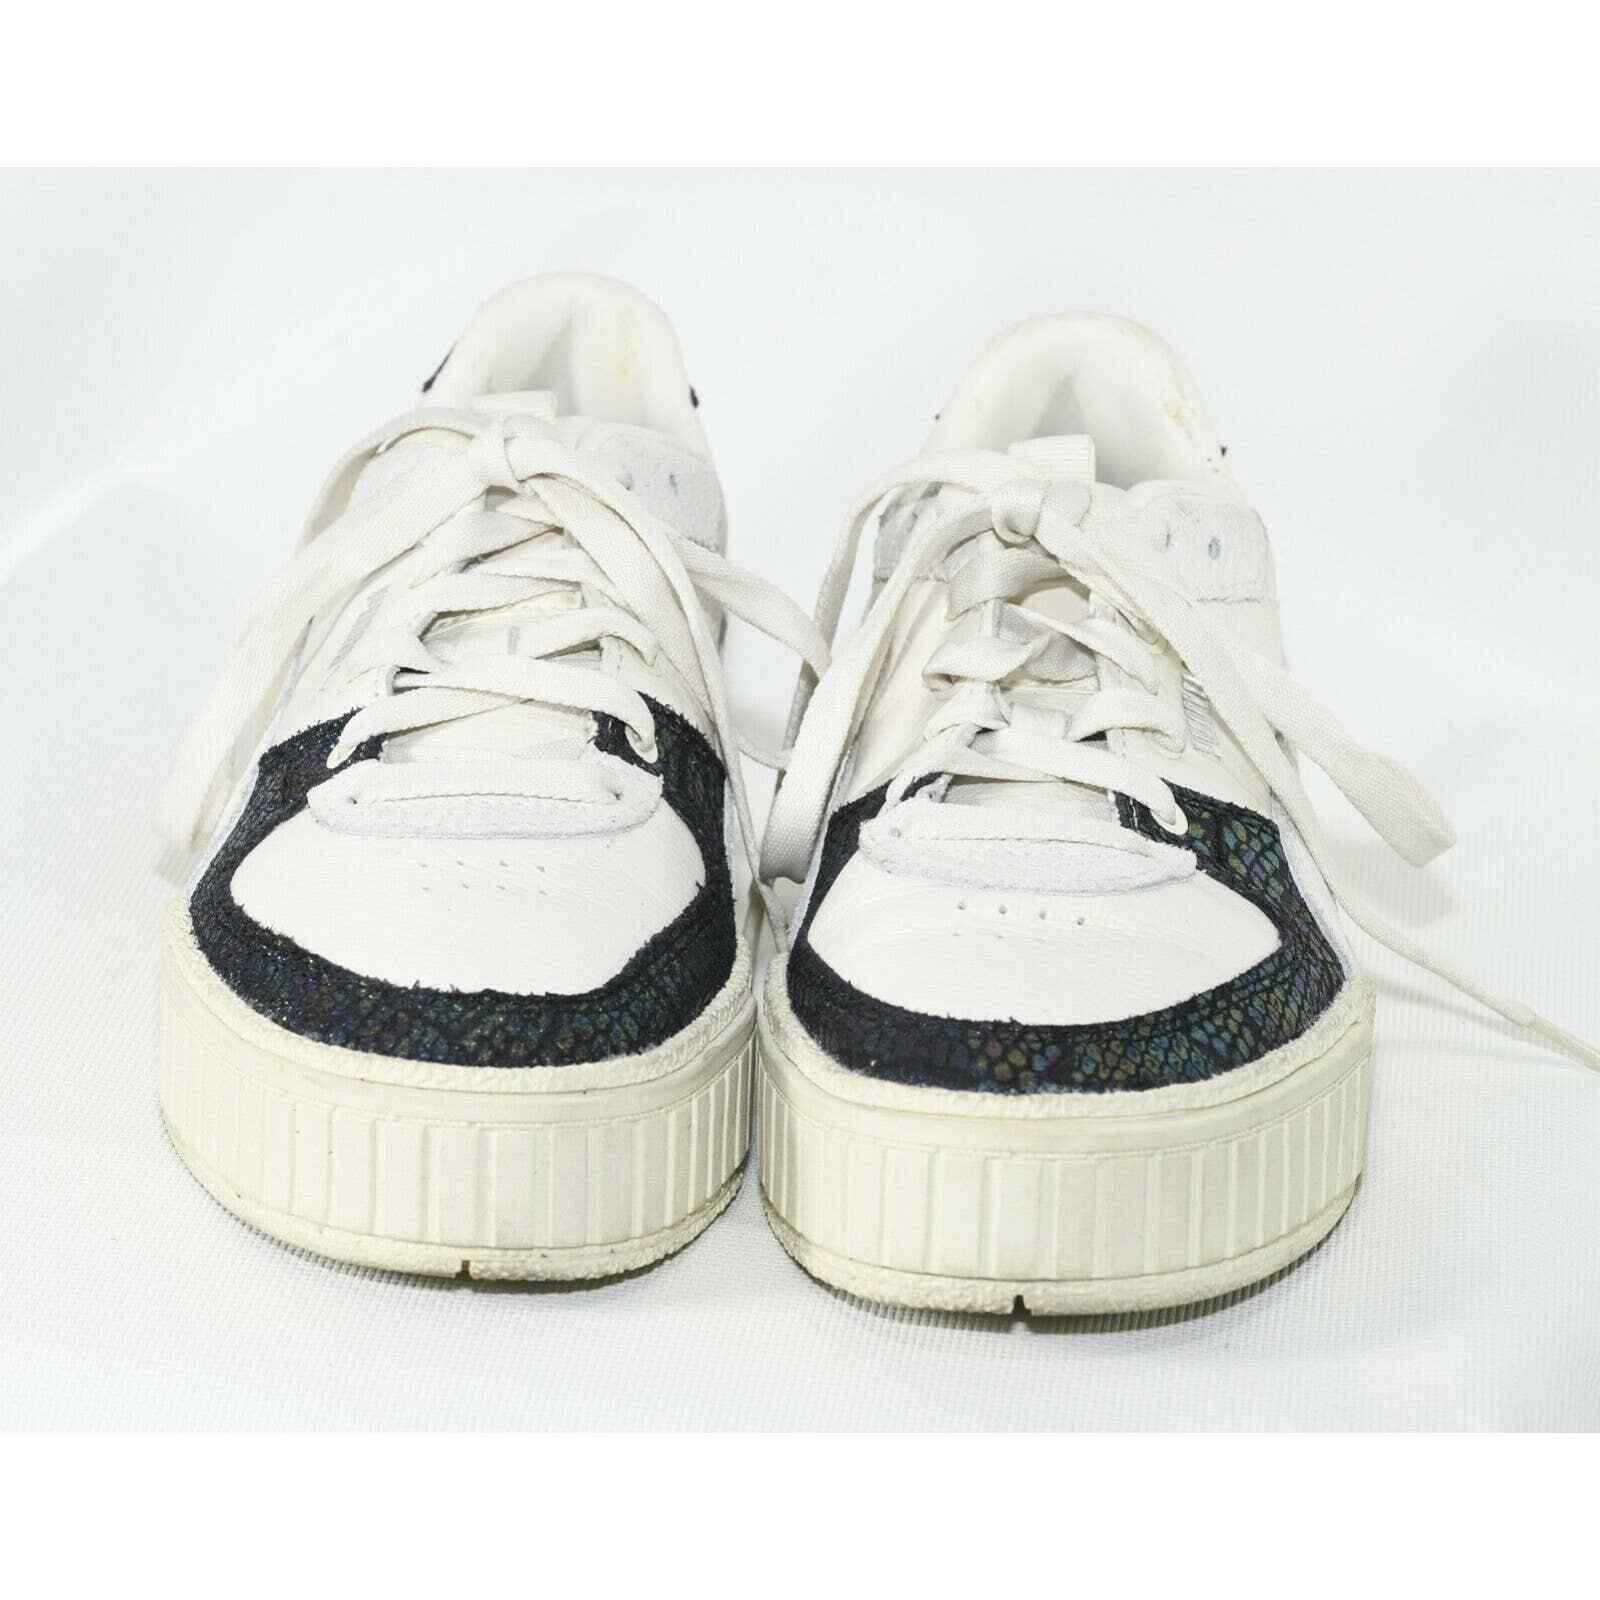 Puma Cali Sport Cream Snake Skin Casual Sneaker Shoe 374351-01 (Womens Size  6.5)